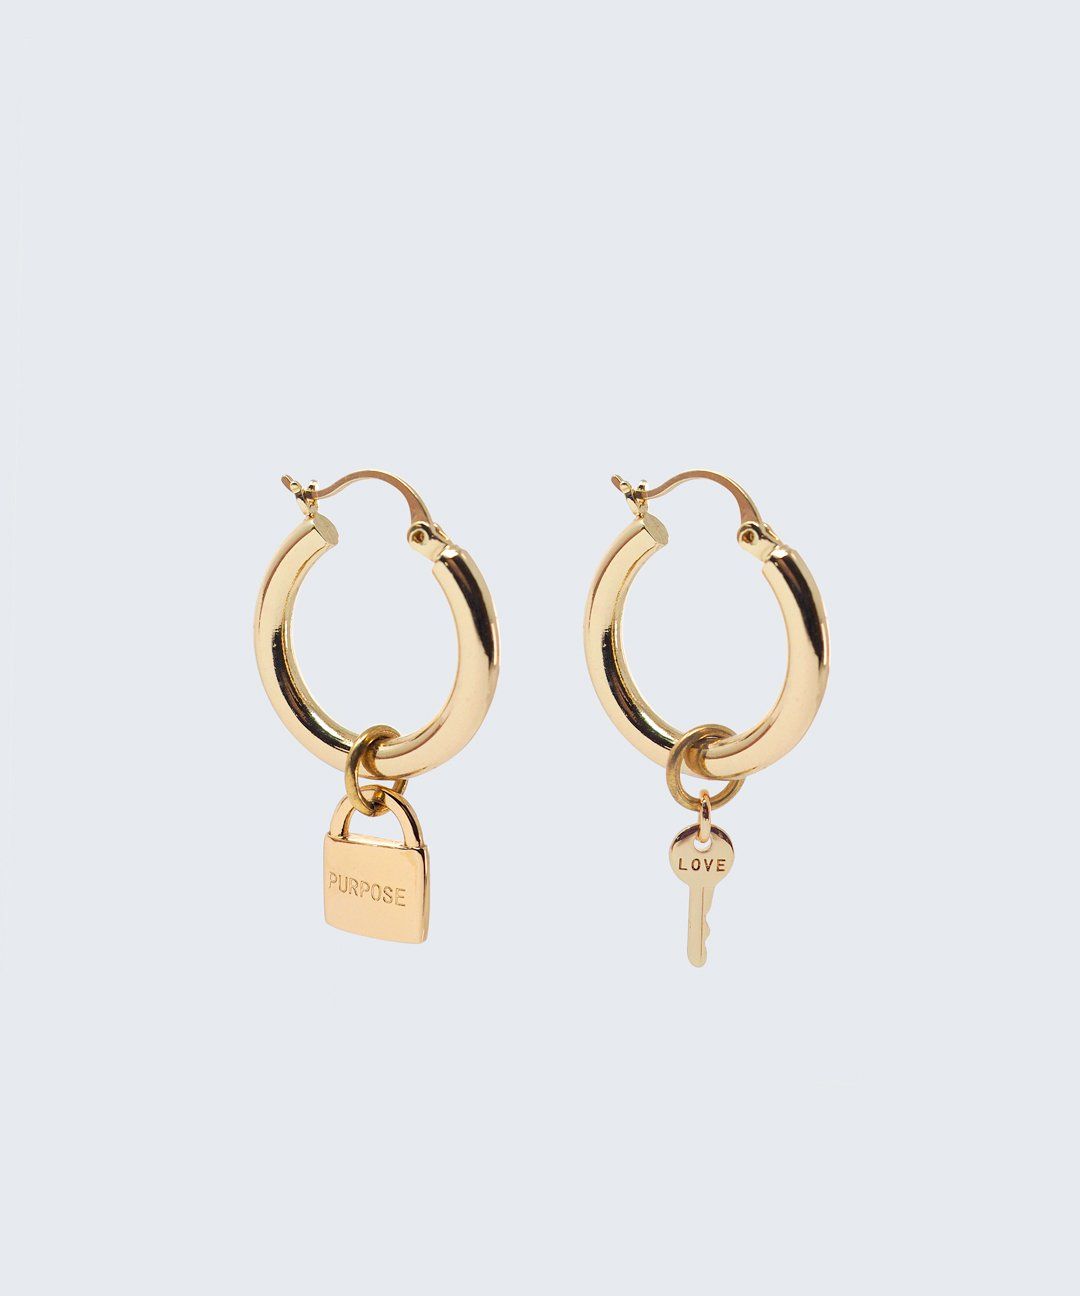 Riji Earrings Earrings The Giving Keys LOVE + PURPOSE Gold 